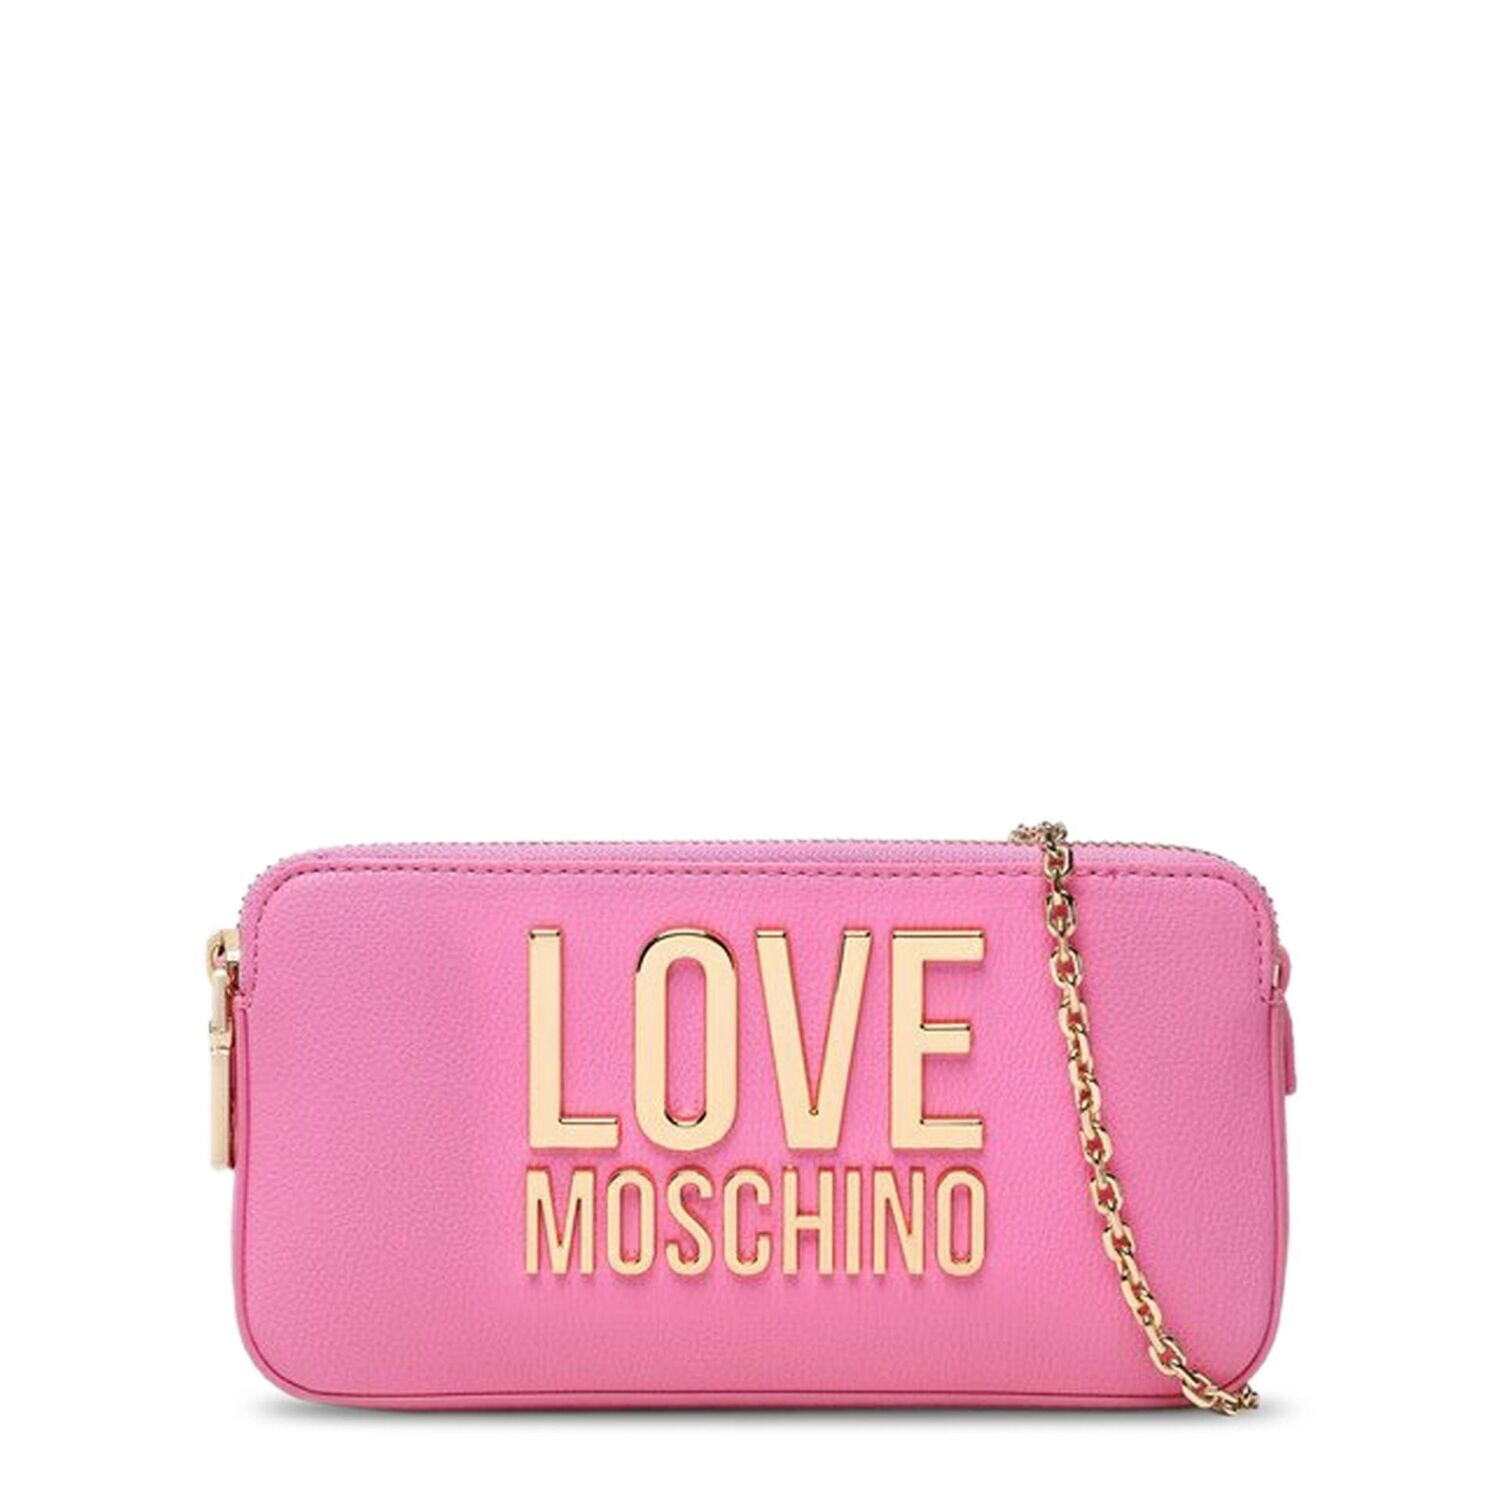 Love Moschino Vibrant Pink Clutch